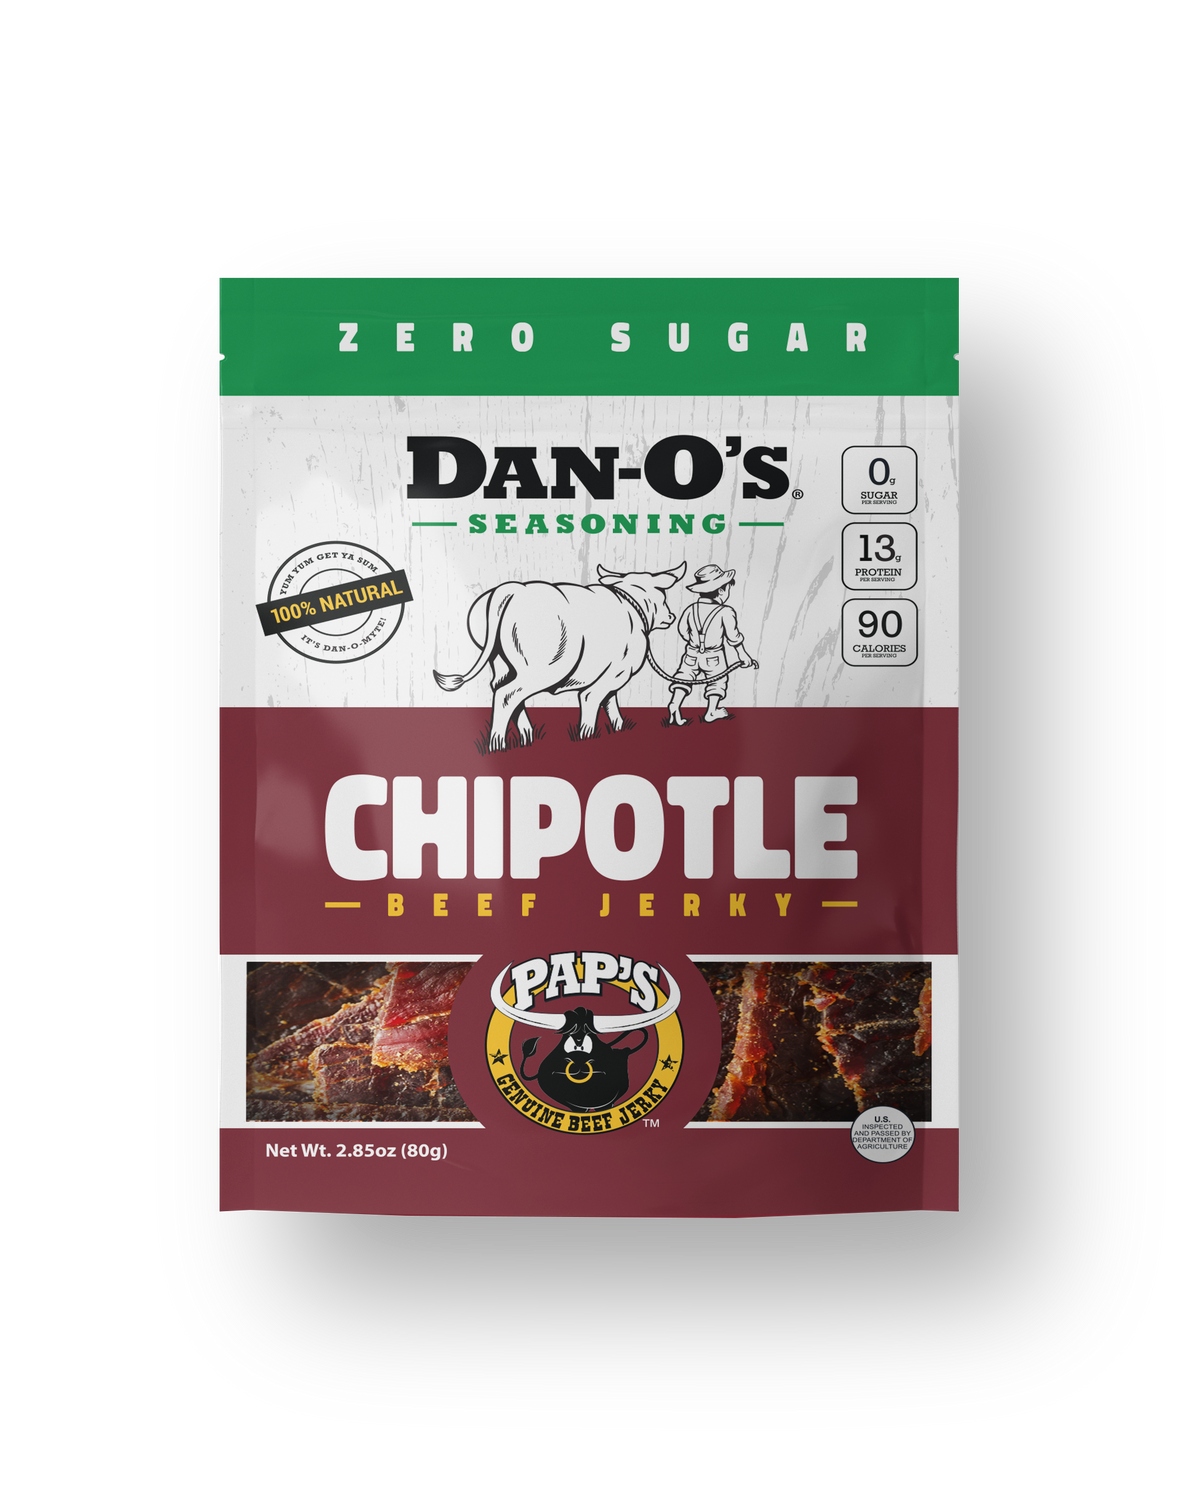 Dan-O's Chipotle Beef Jerky